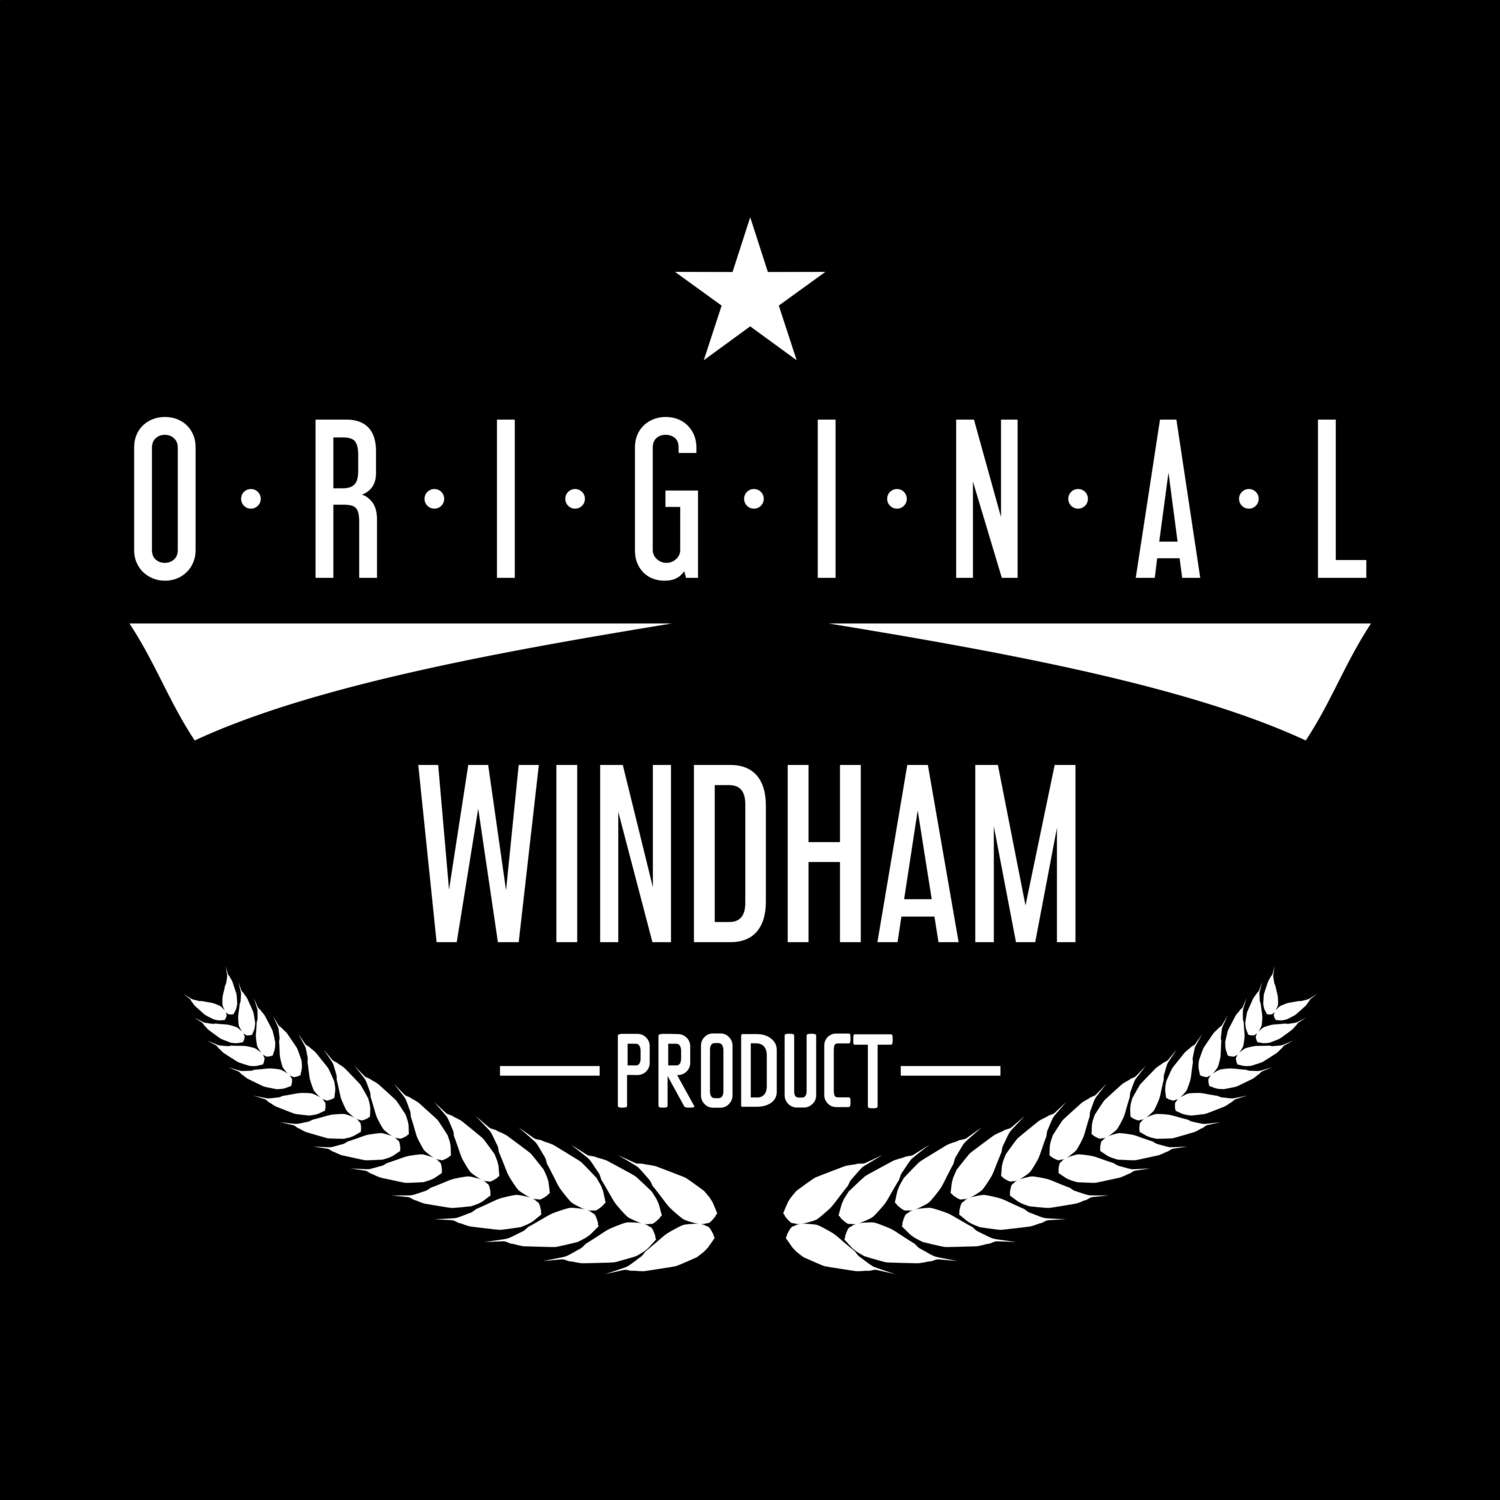 Windham T-Shirt »Original Product«